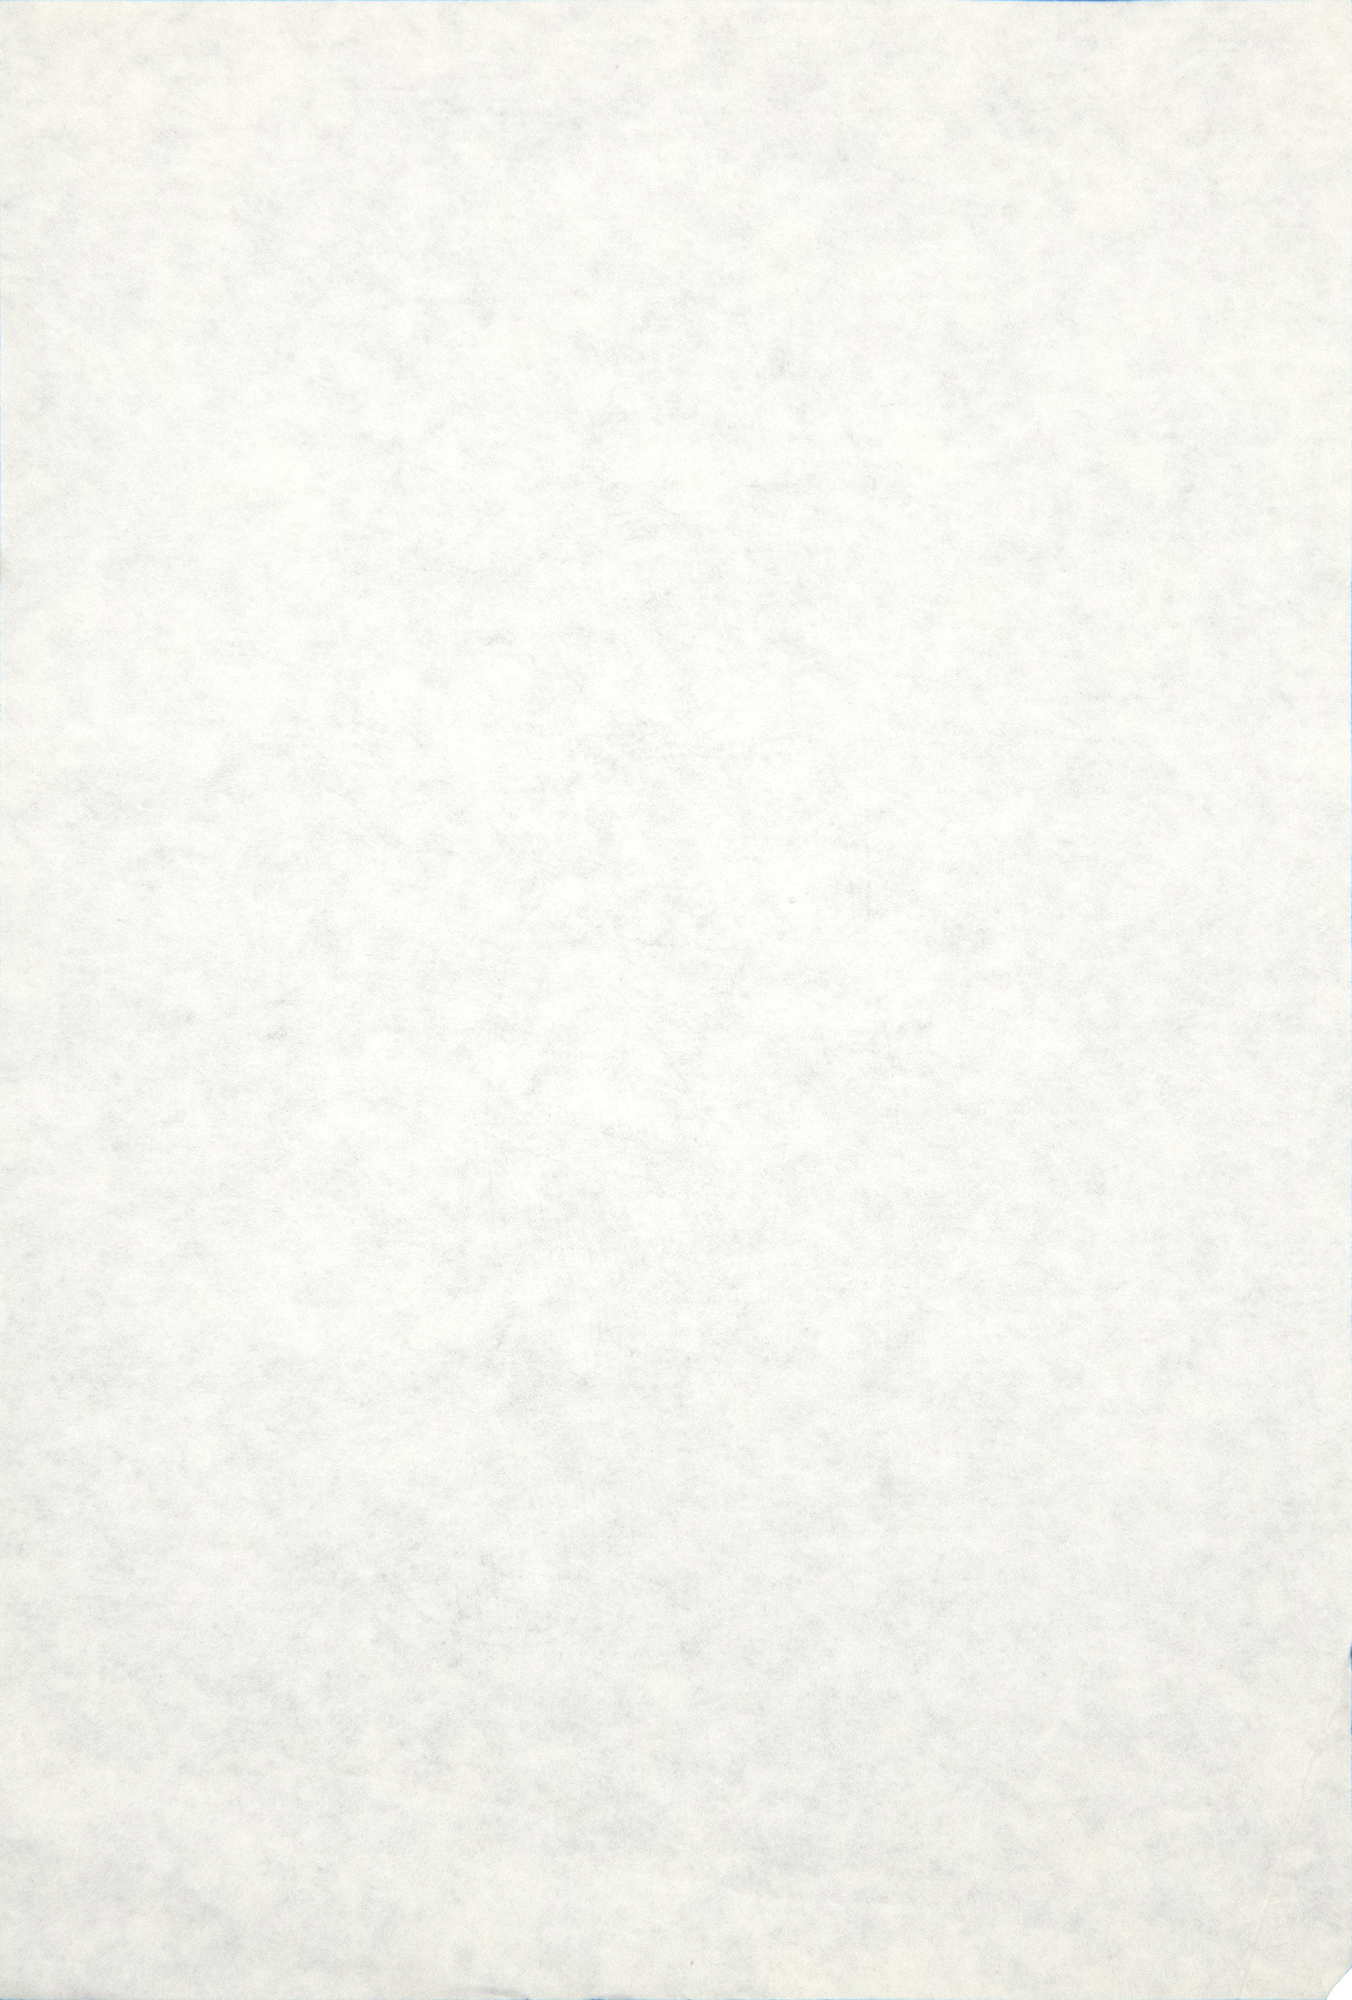 IRVING NORMAN - Sin título (Hombre Fumador) - bolígrafo sobre papel - 8 7/8 x 6 pulgadas.